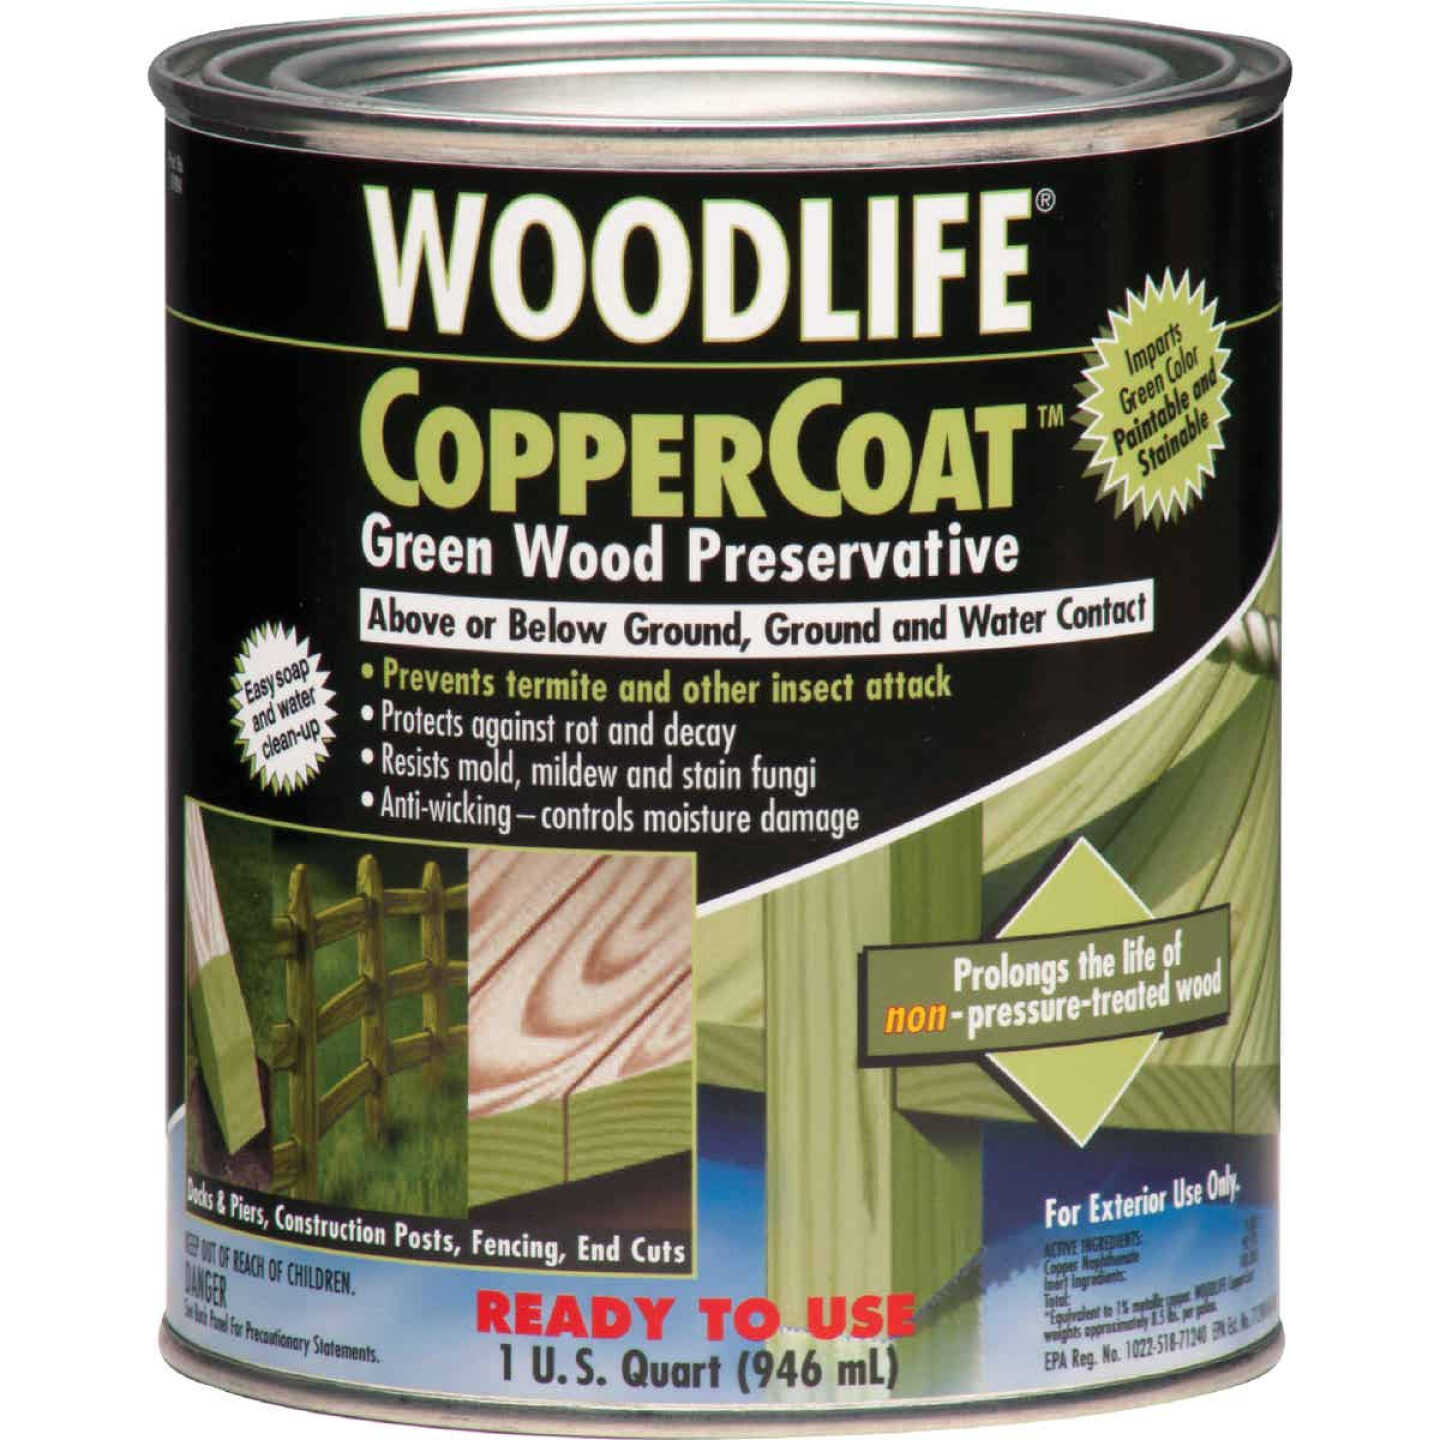 WOODLIFE® CopperCoat™ Green Wood Preservative